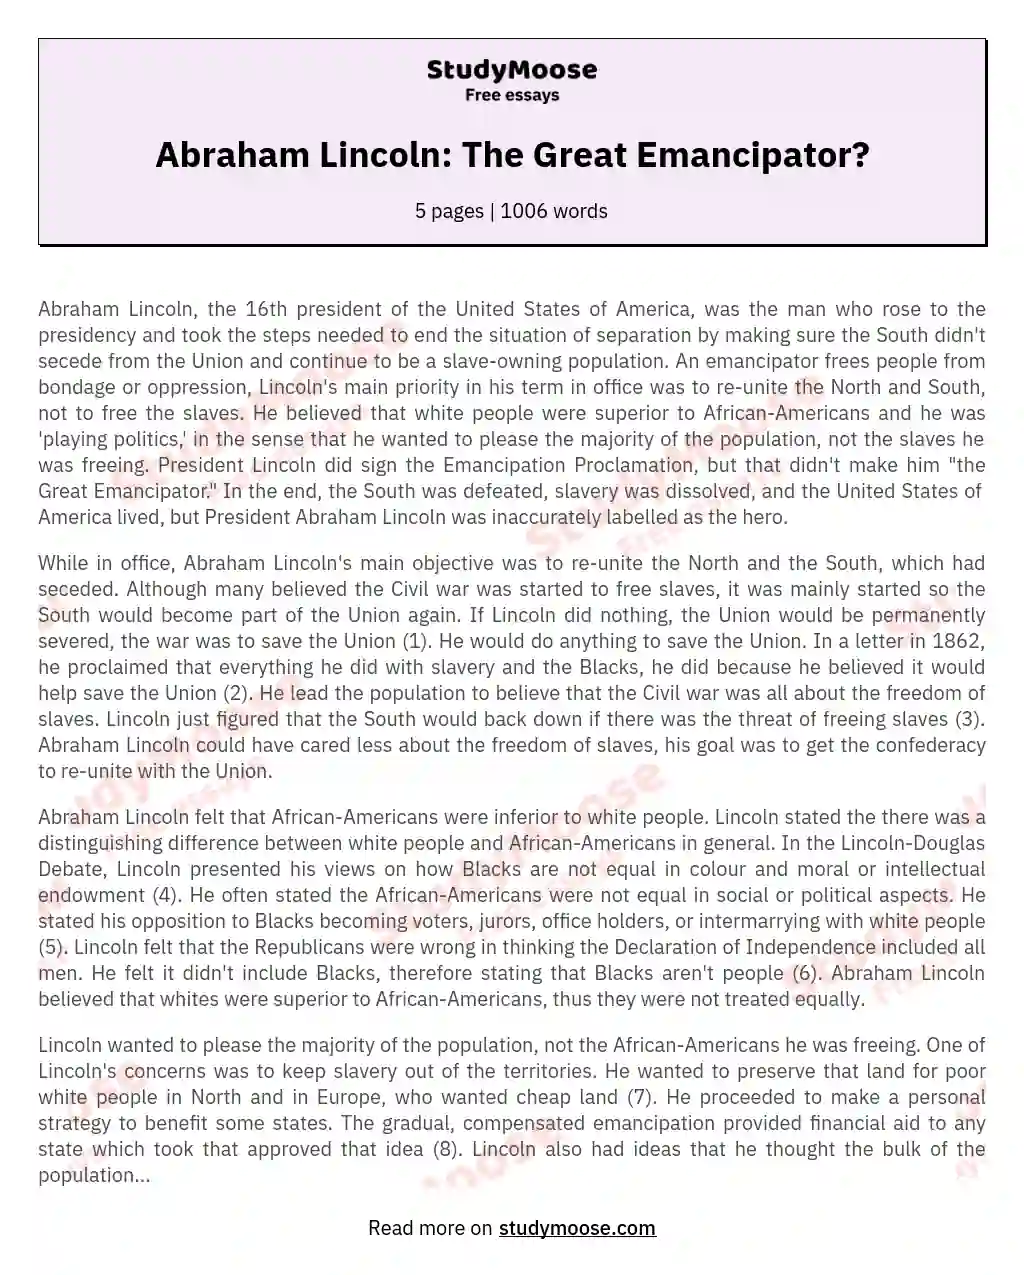 Abraham Lincoln: The Great Emancipator?